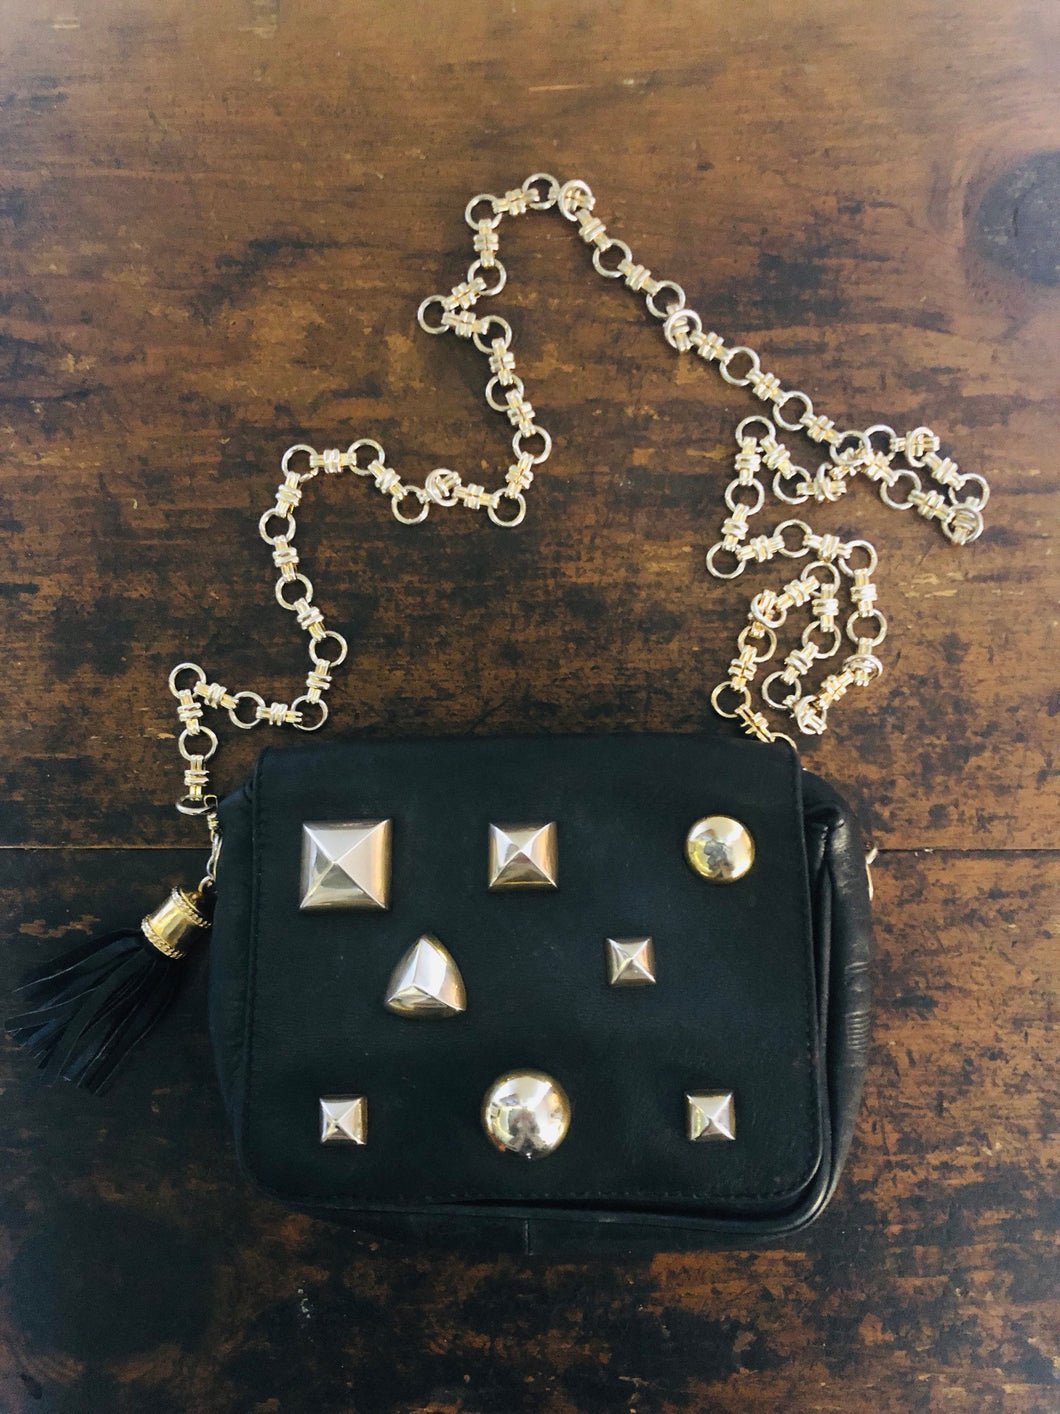 Vintage 80s cross body black leather studded punk chic purse